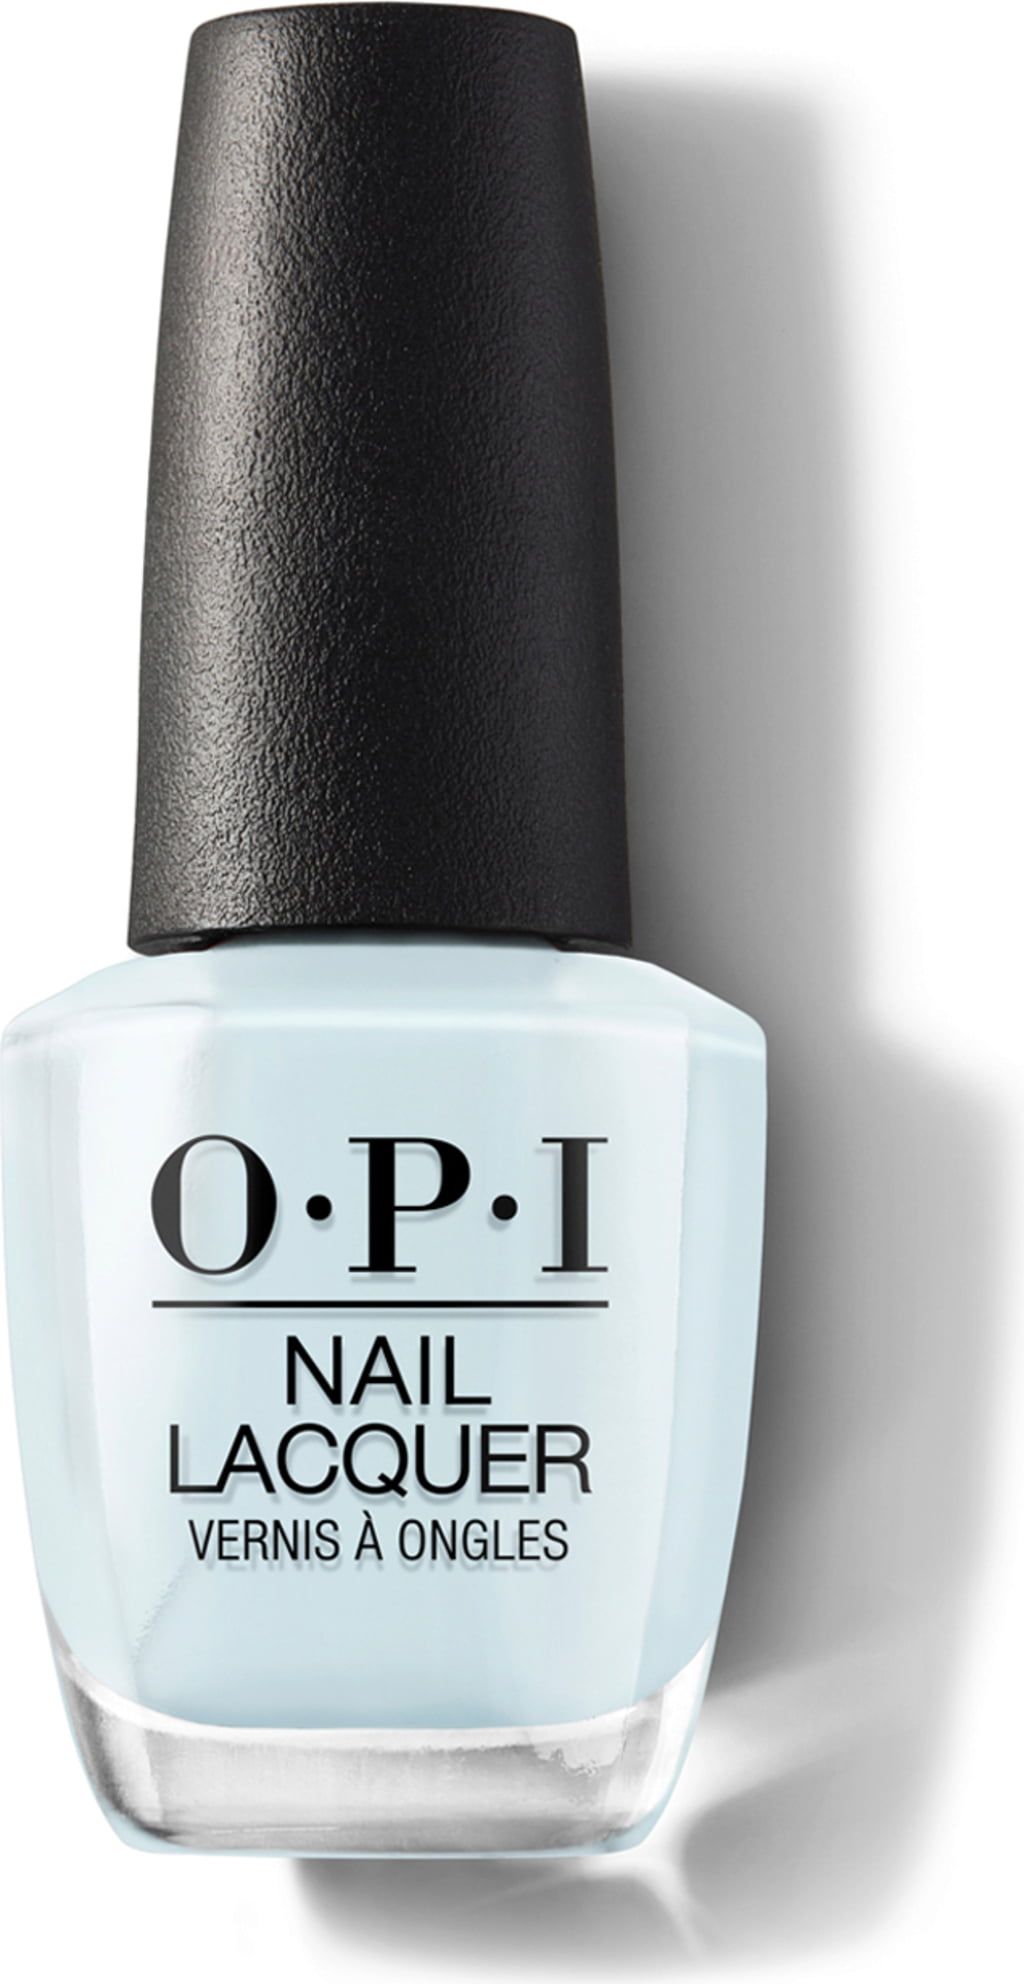 opi nail lacquer blues greens its a boy 503162 en